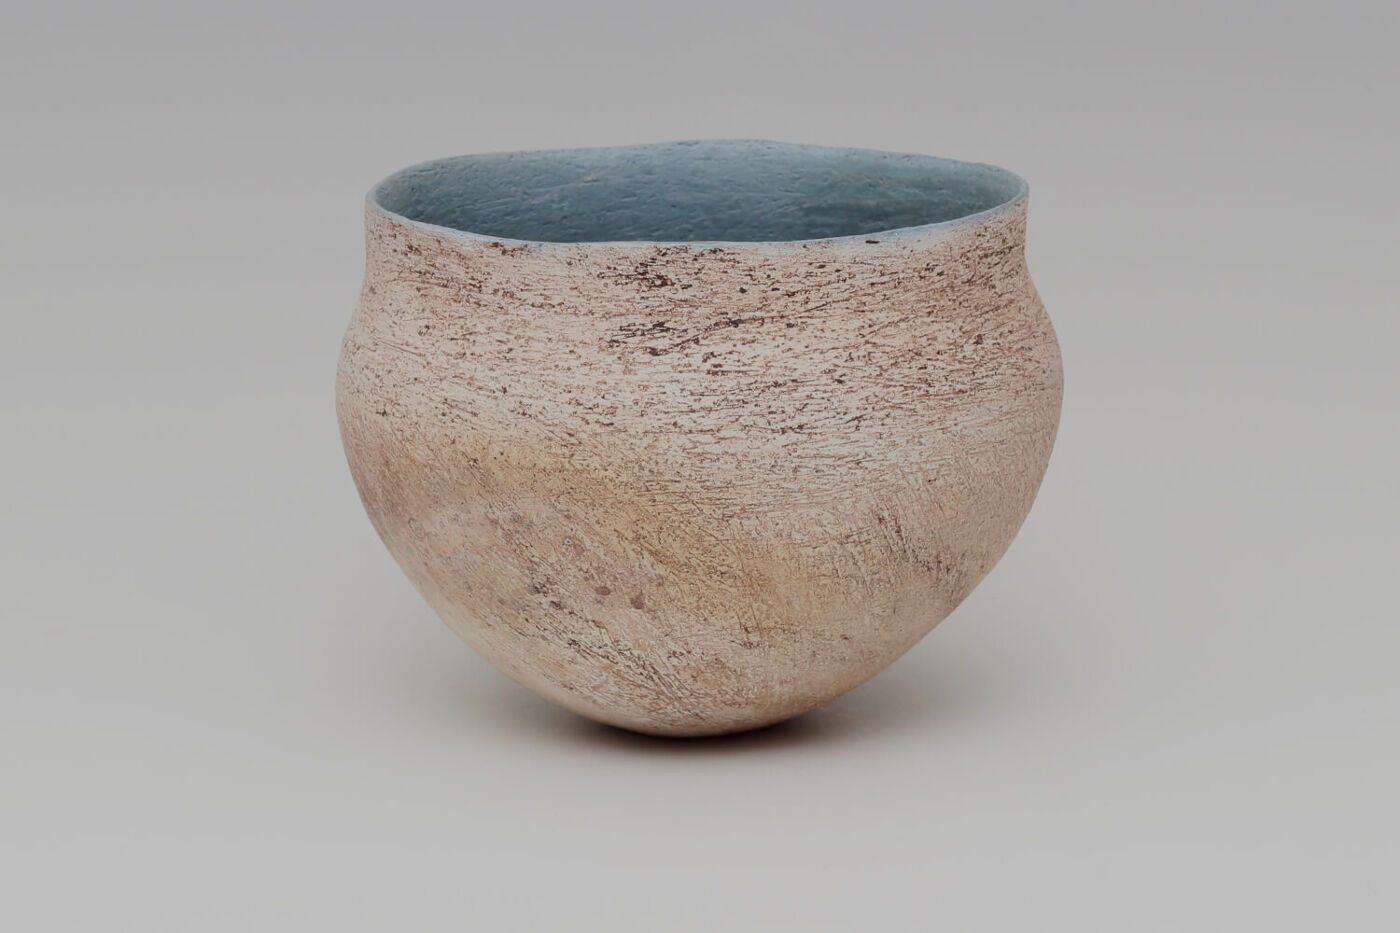 Elspeth Owen Ceramic Jar 41